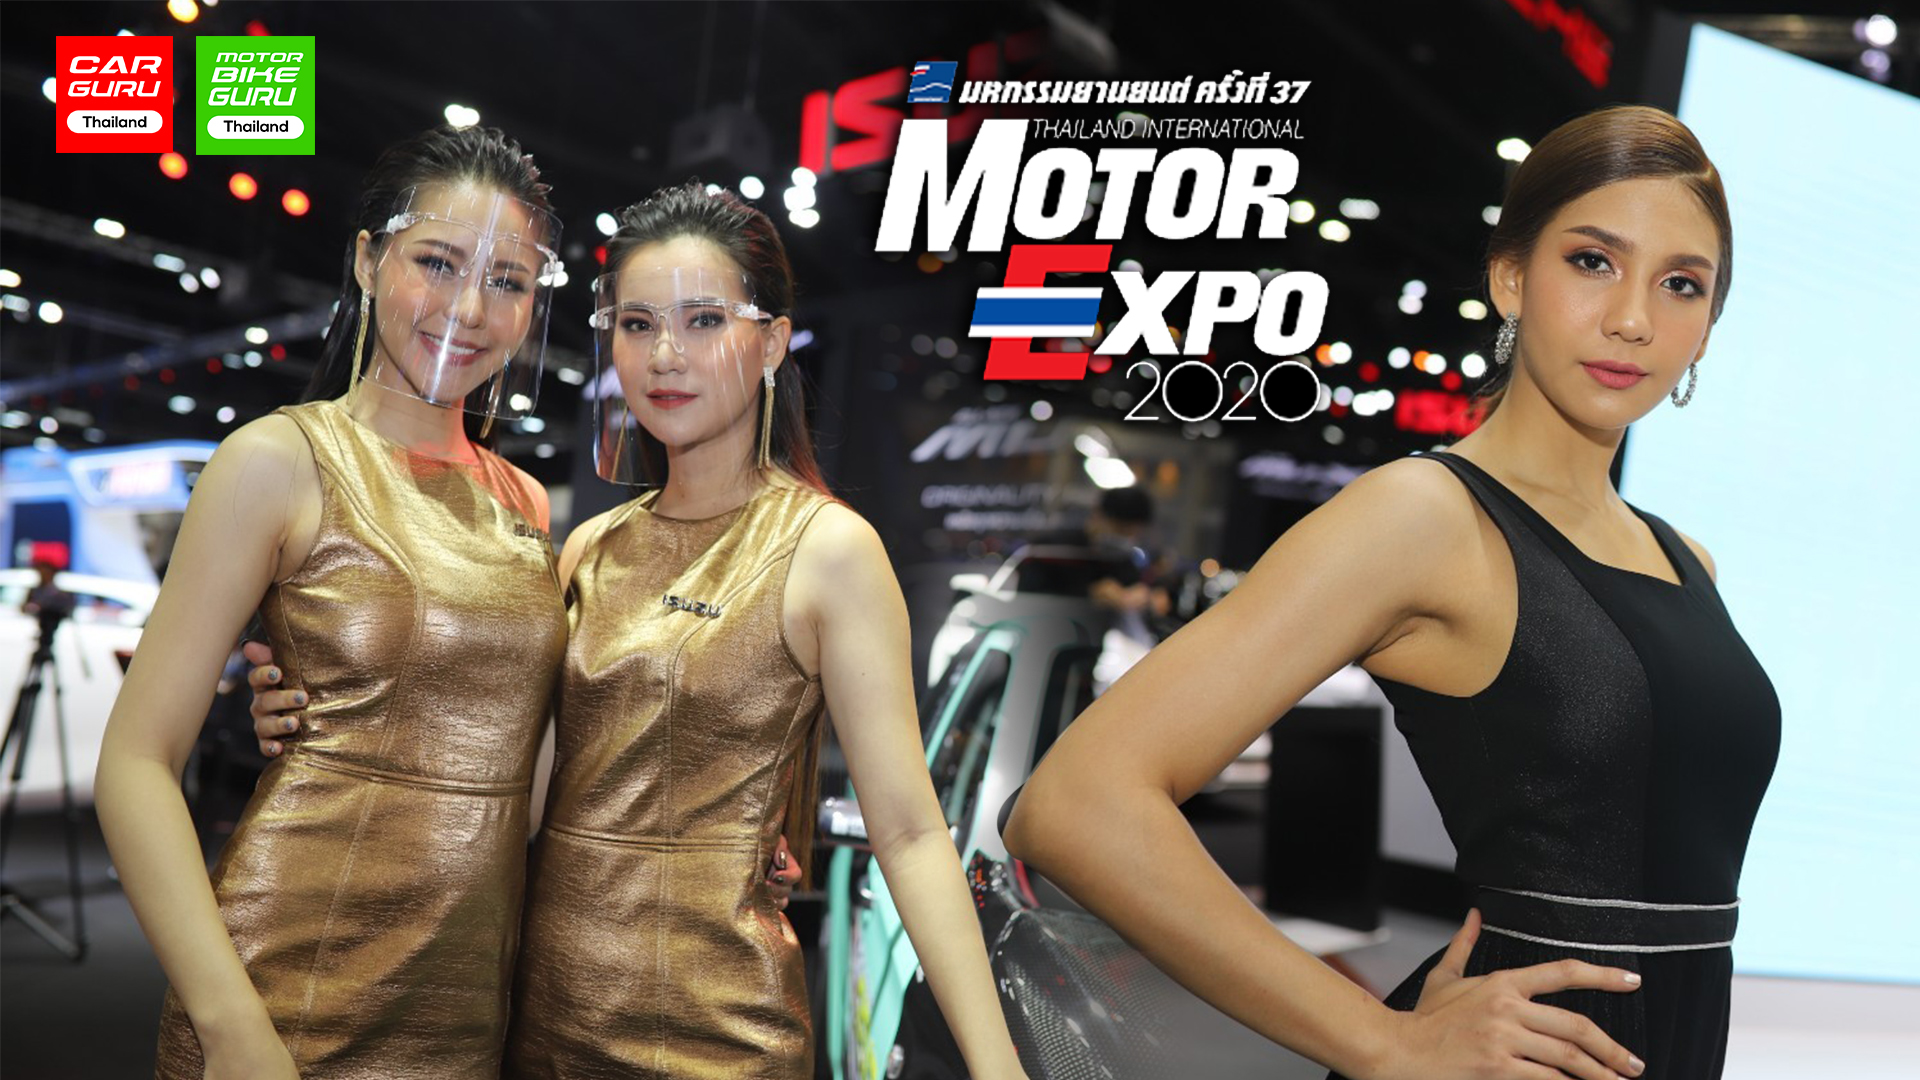 MOTOR EXPO 2020 - รถยนต์ บิ๊กไบค์ ของแต่ง โปรโมชั่น พร้อมเข้าชม 2 - 13 ธ.ค. 63